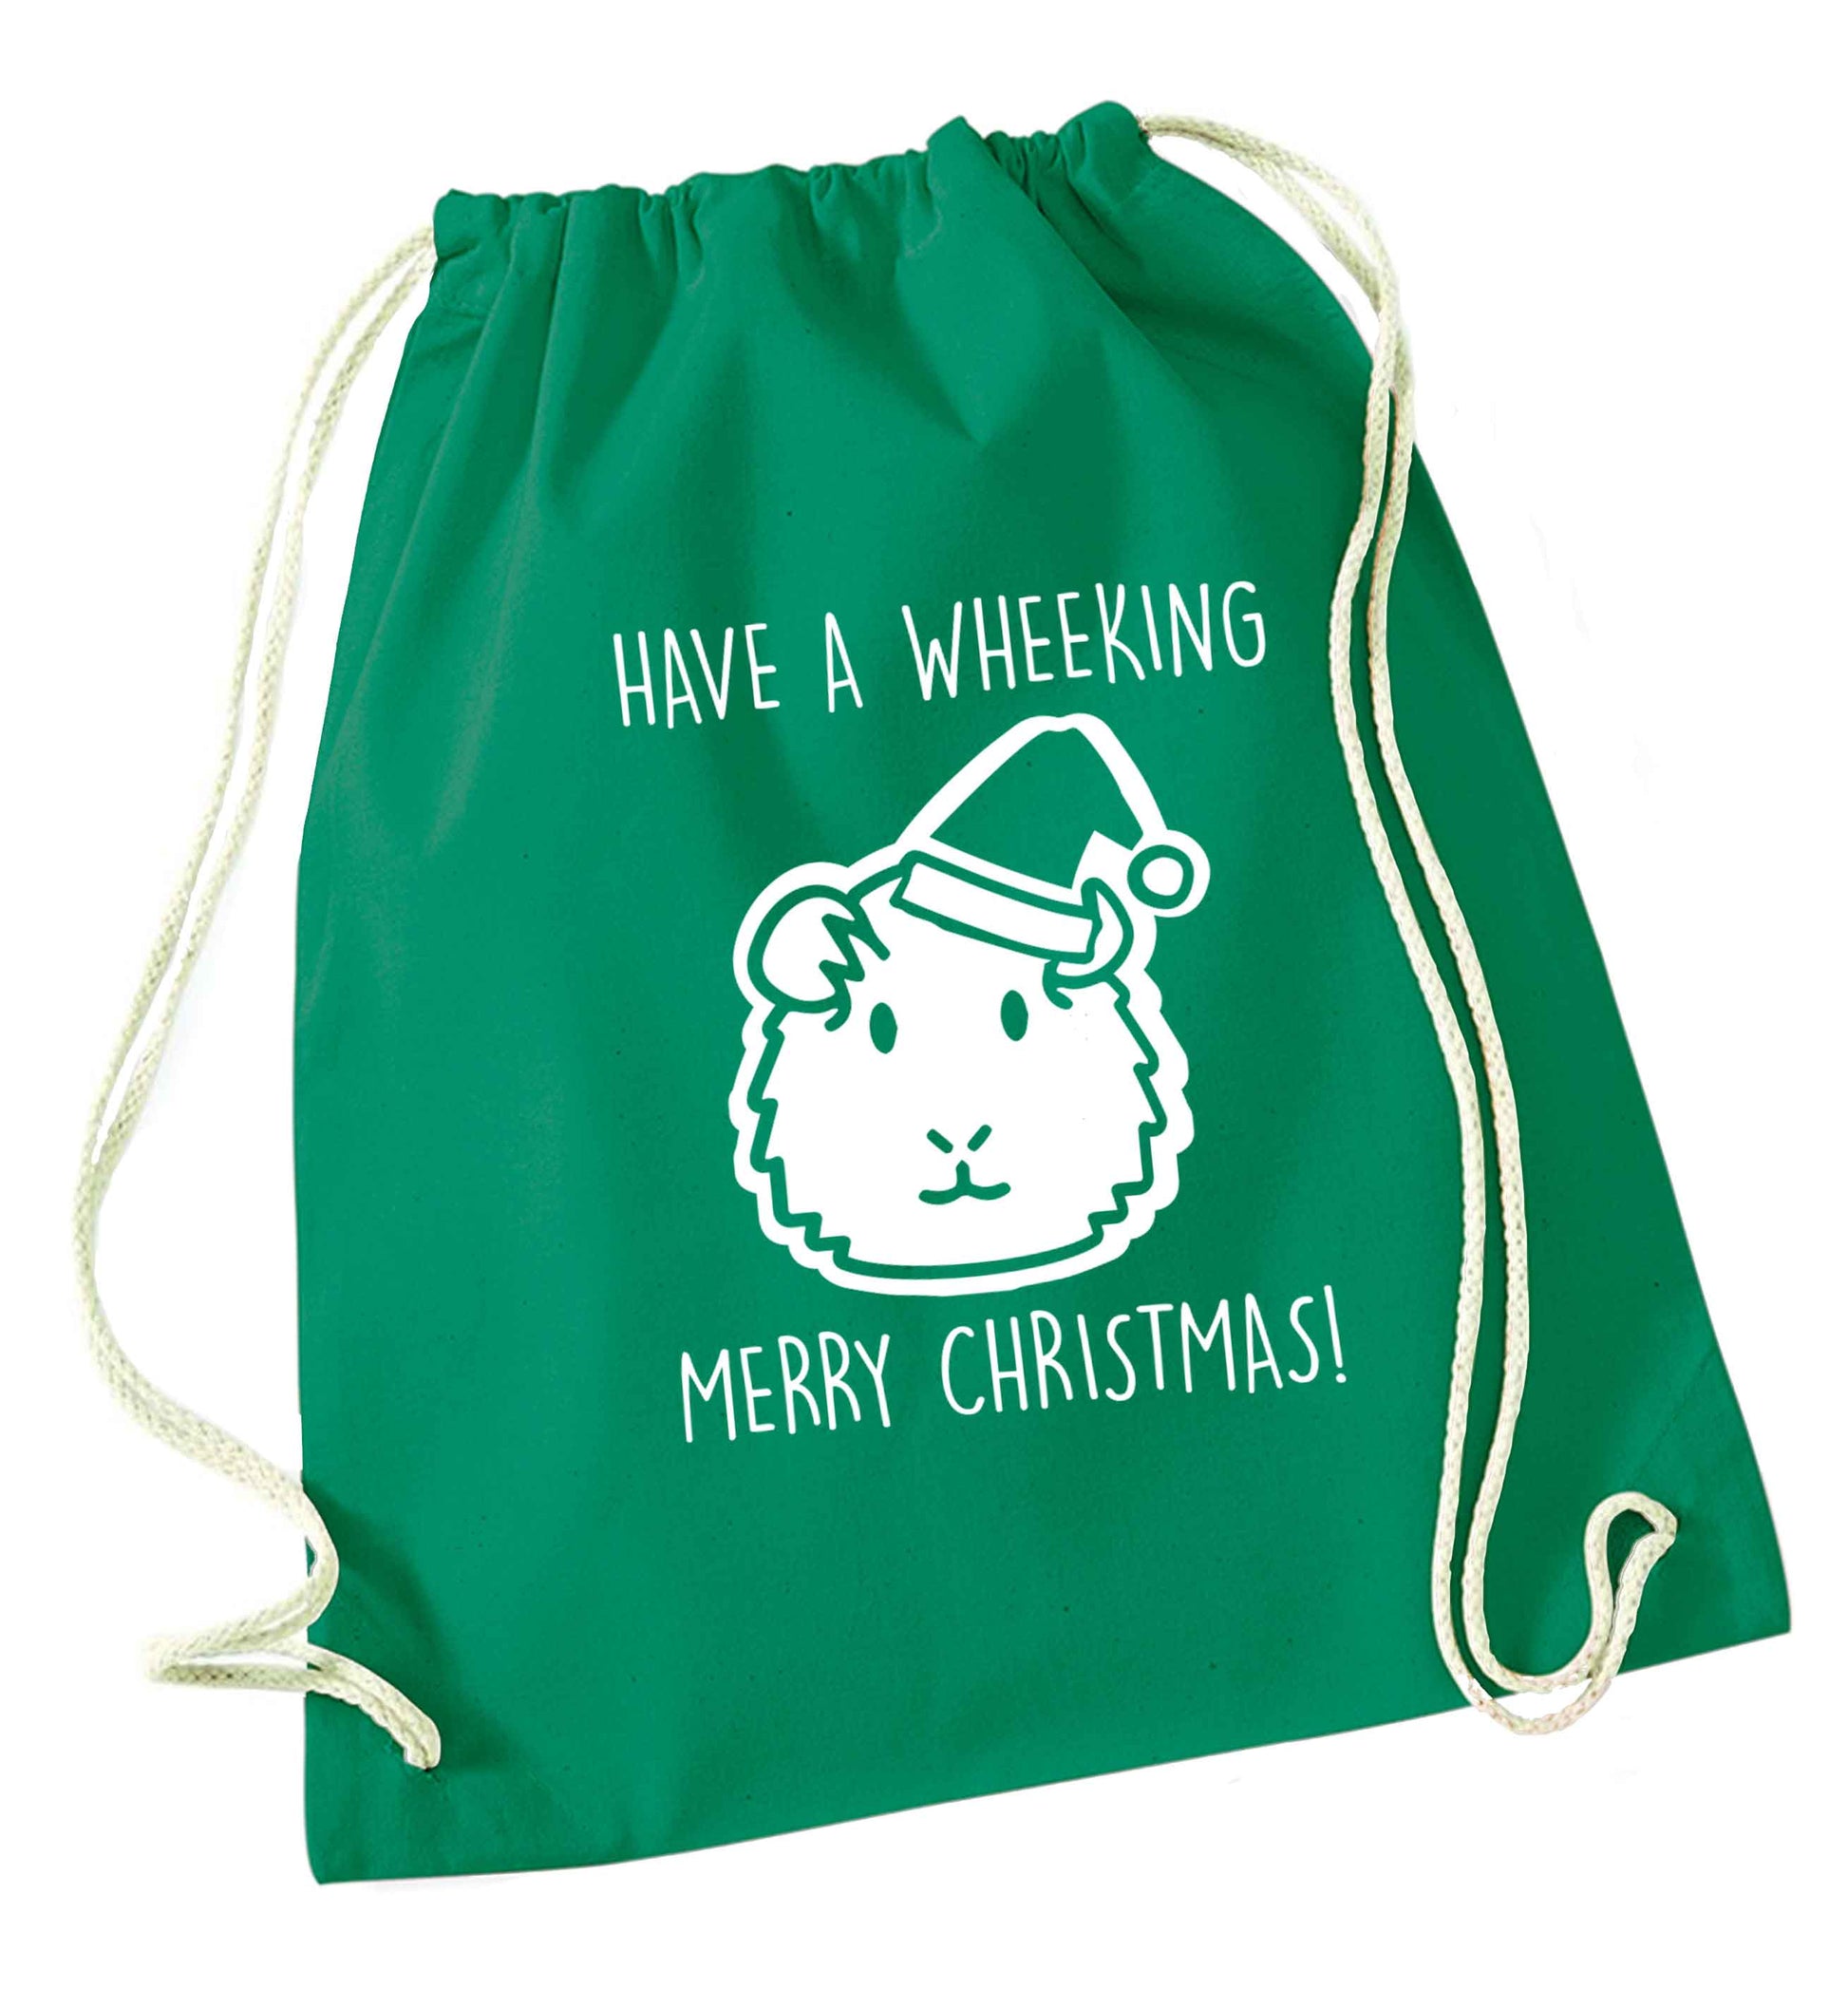 Have a wheeking merry Christmas green drawstring bag